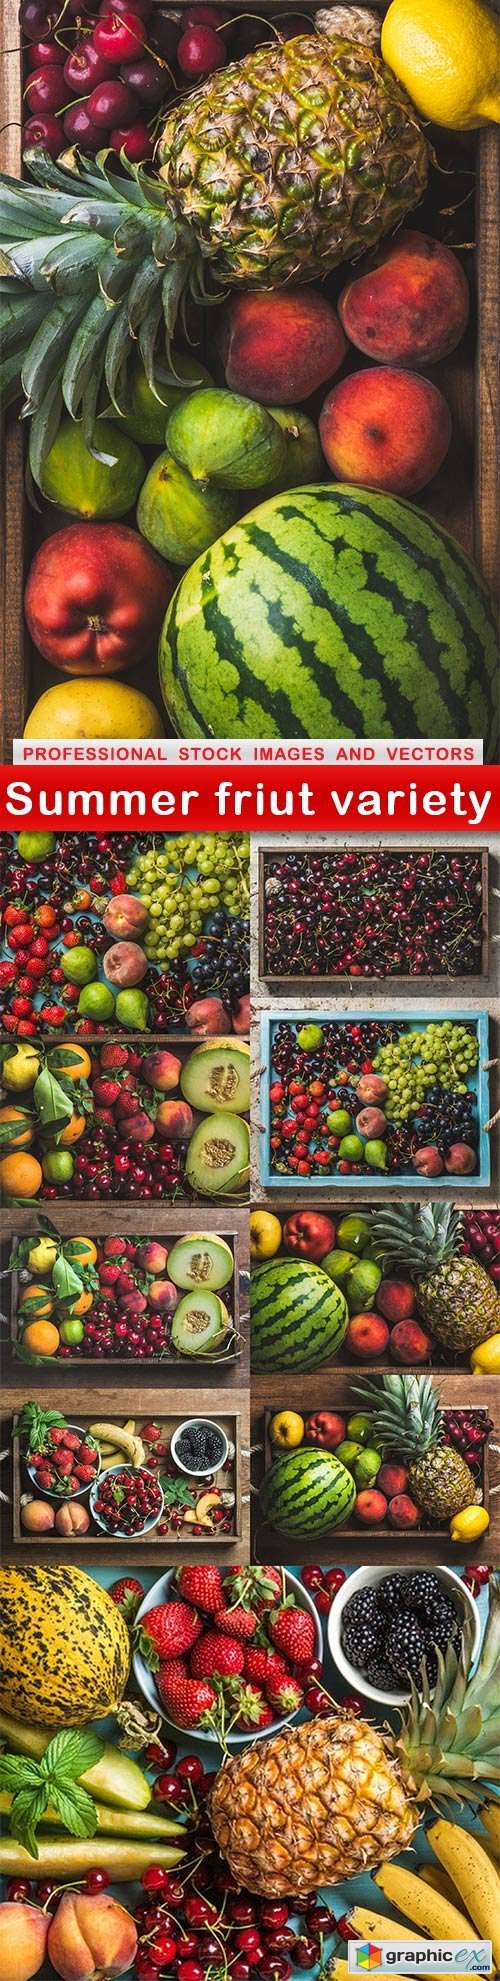 Summer friut variety - 10 UHQ JPEG